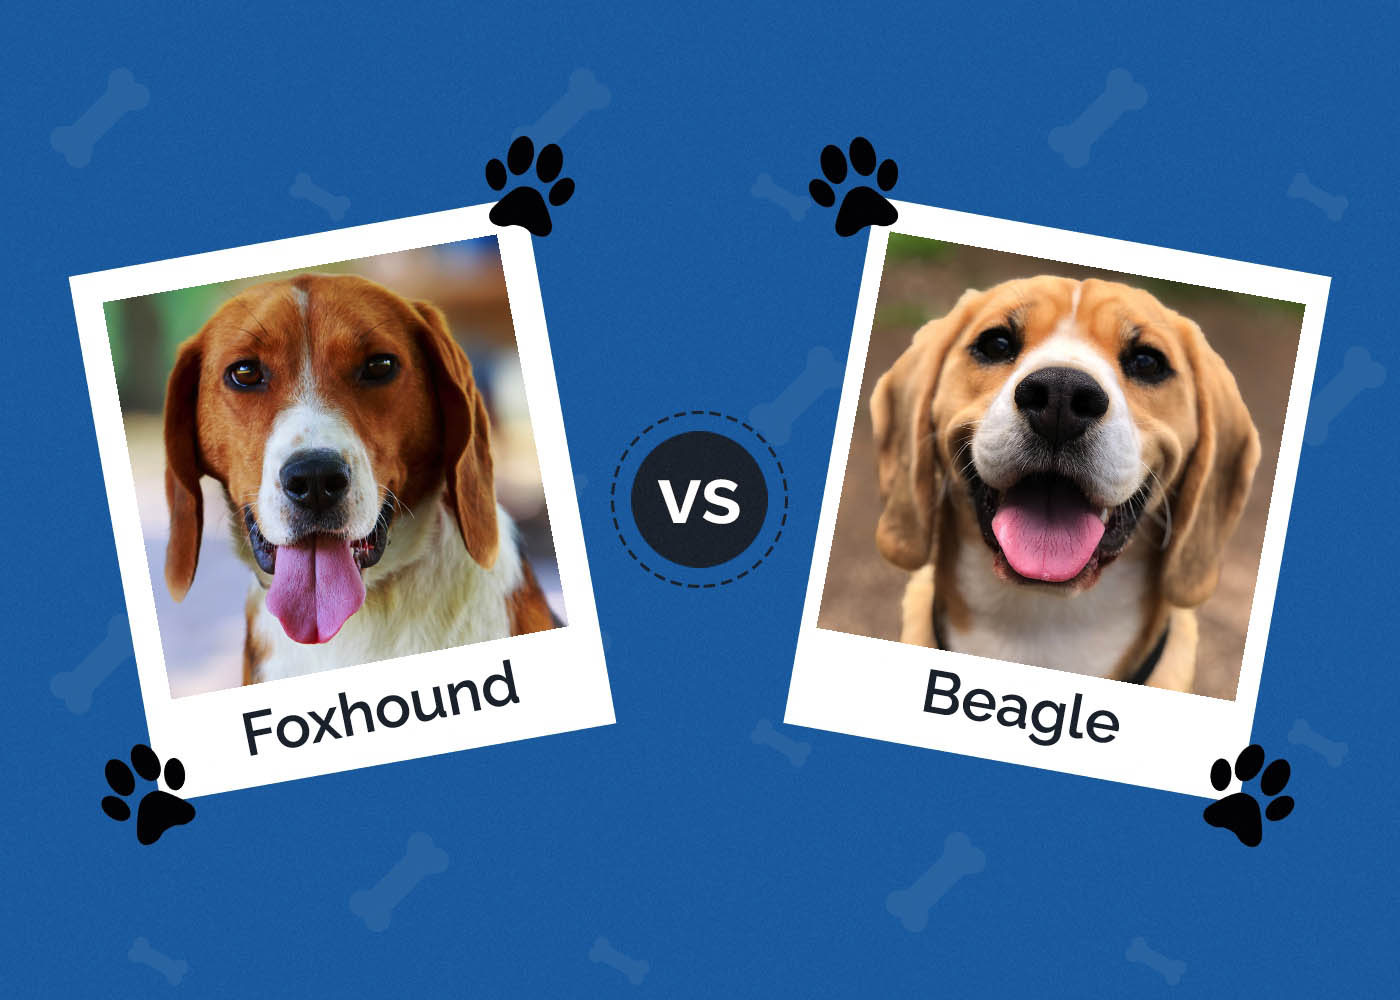 Foxhound vs Beagle